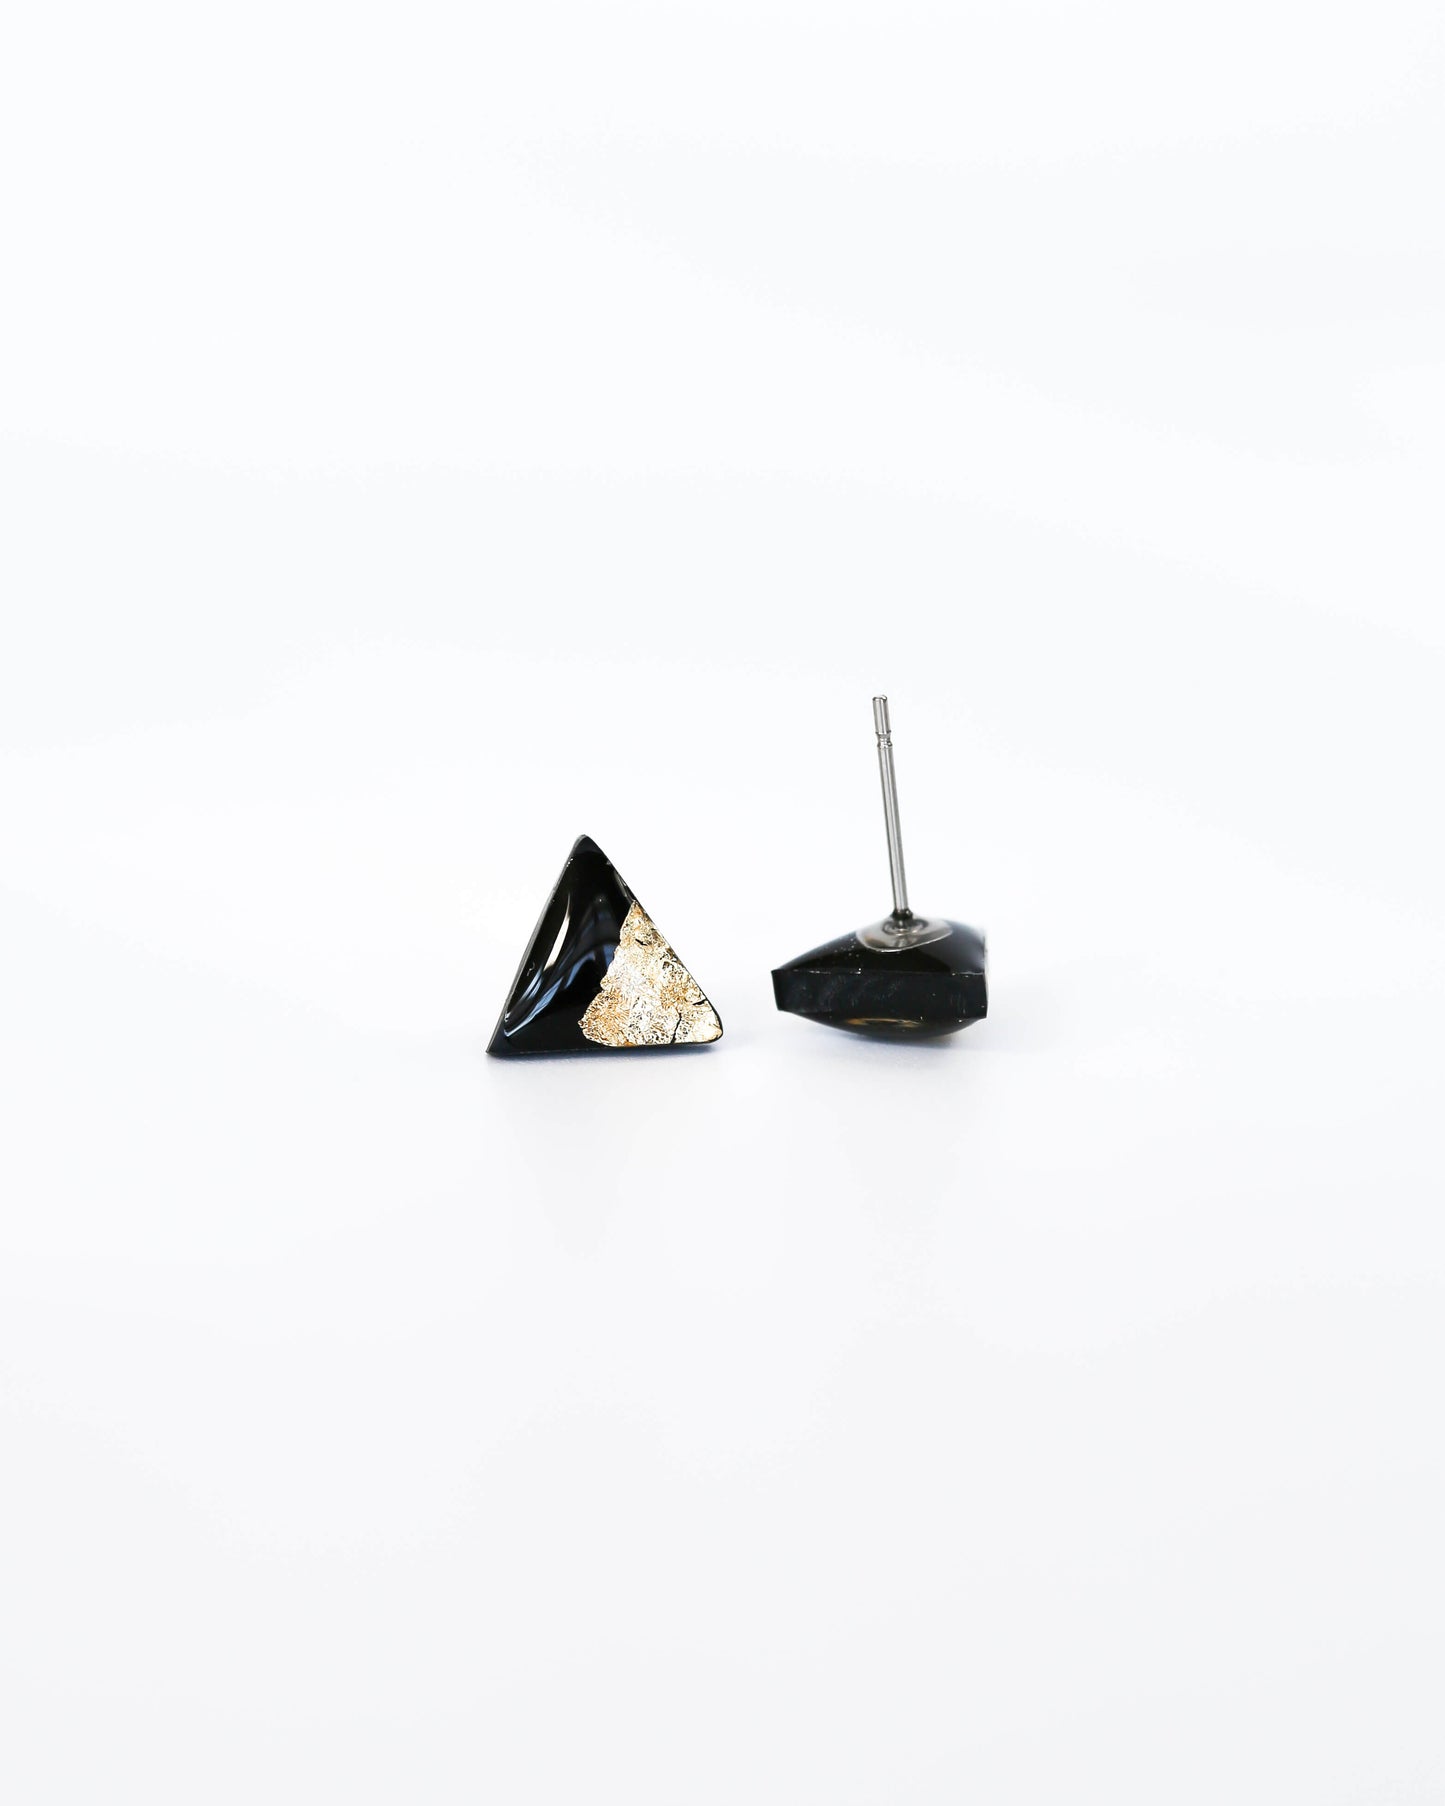 Black triangle studs free shipping - Ollijewelry